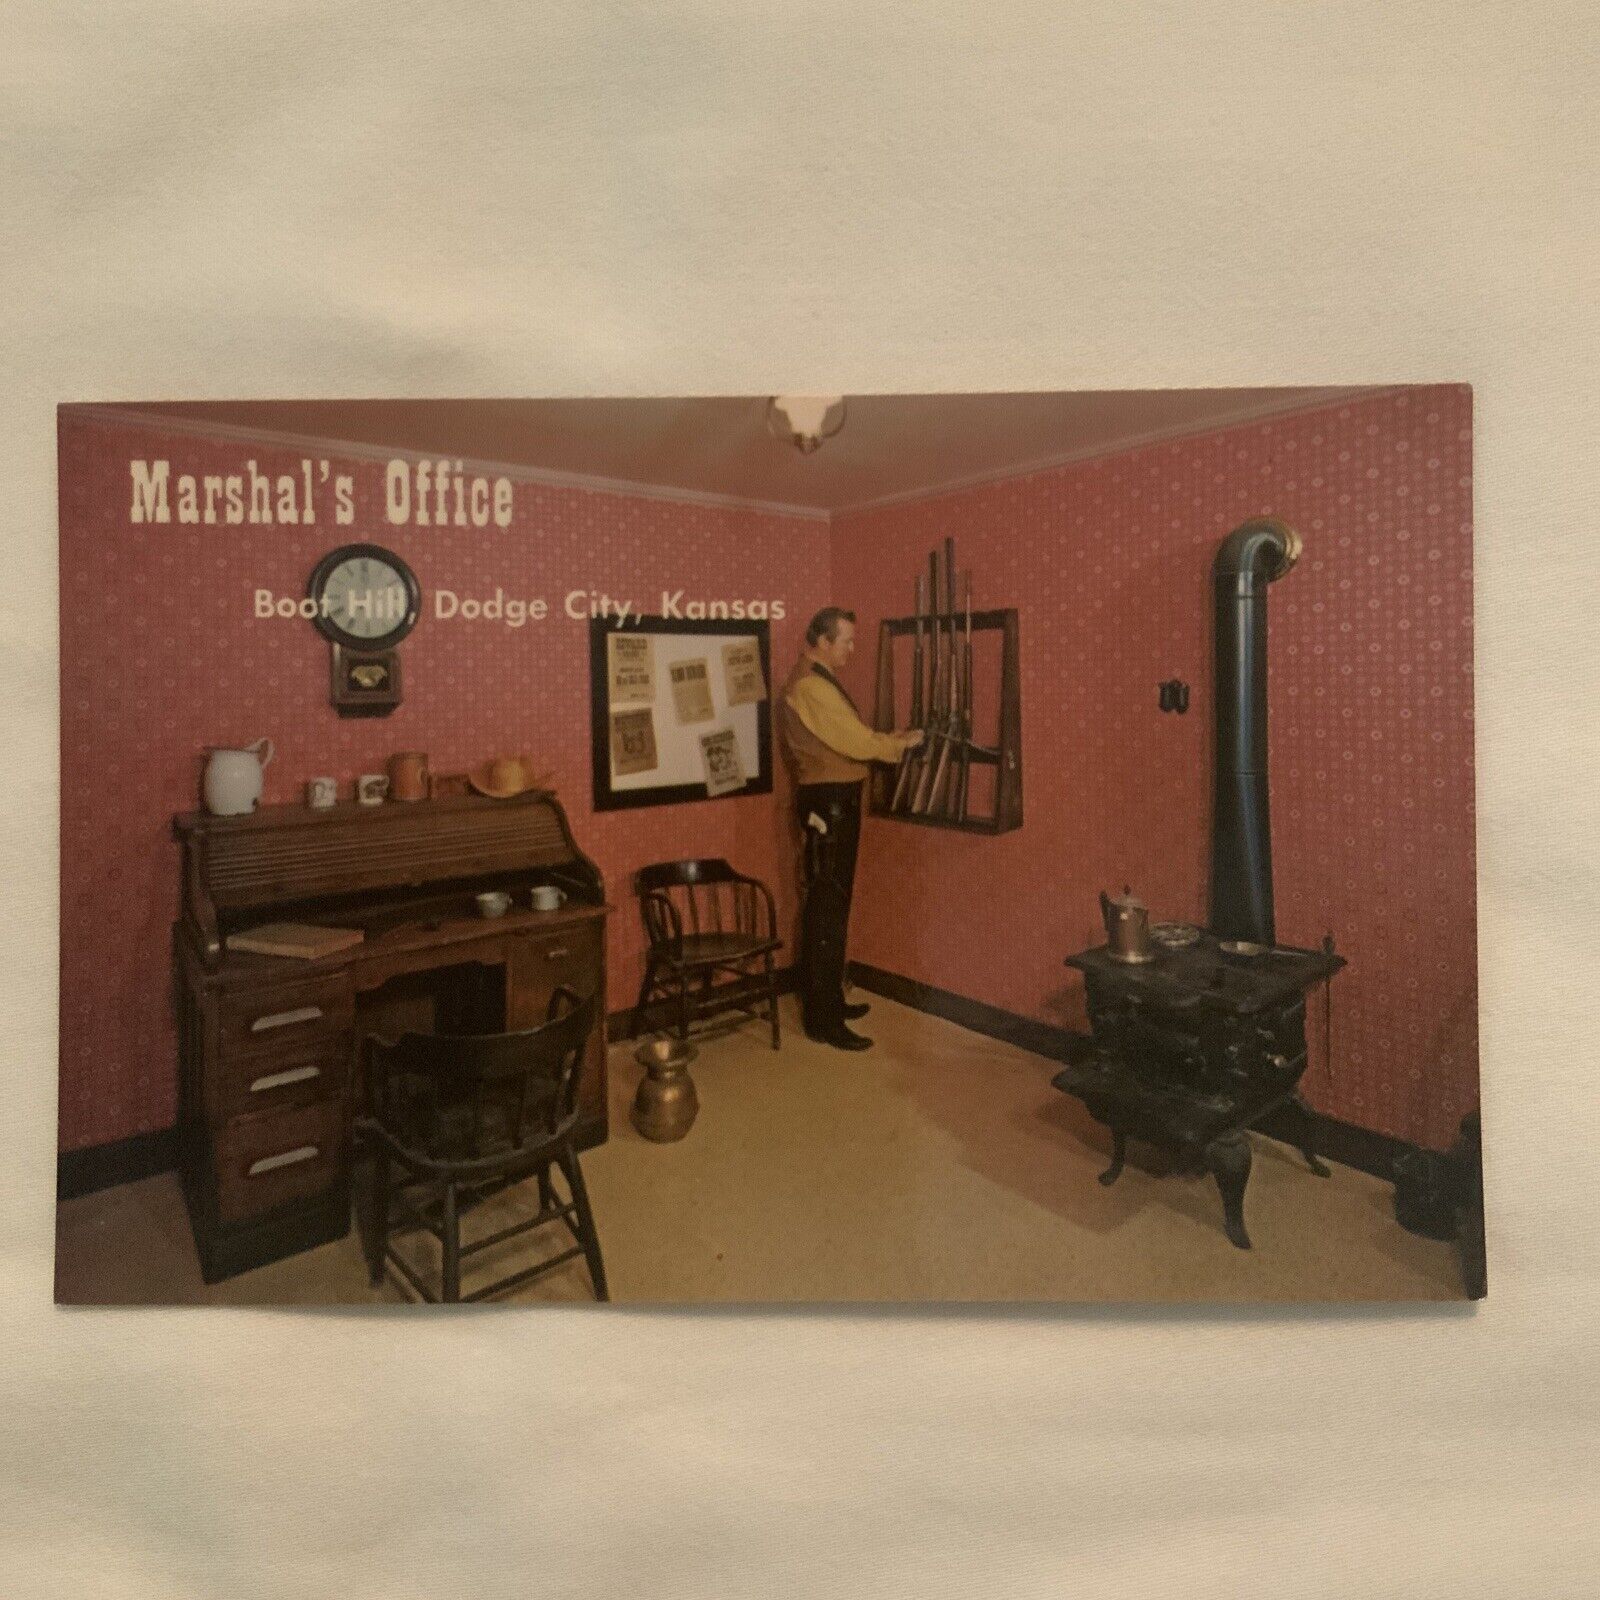 Marshal’s Office Boot Hill, Dodge City, Kansas…Vintage Postcard